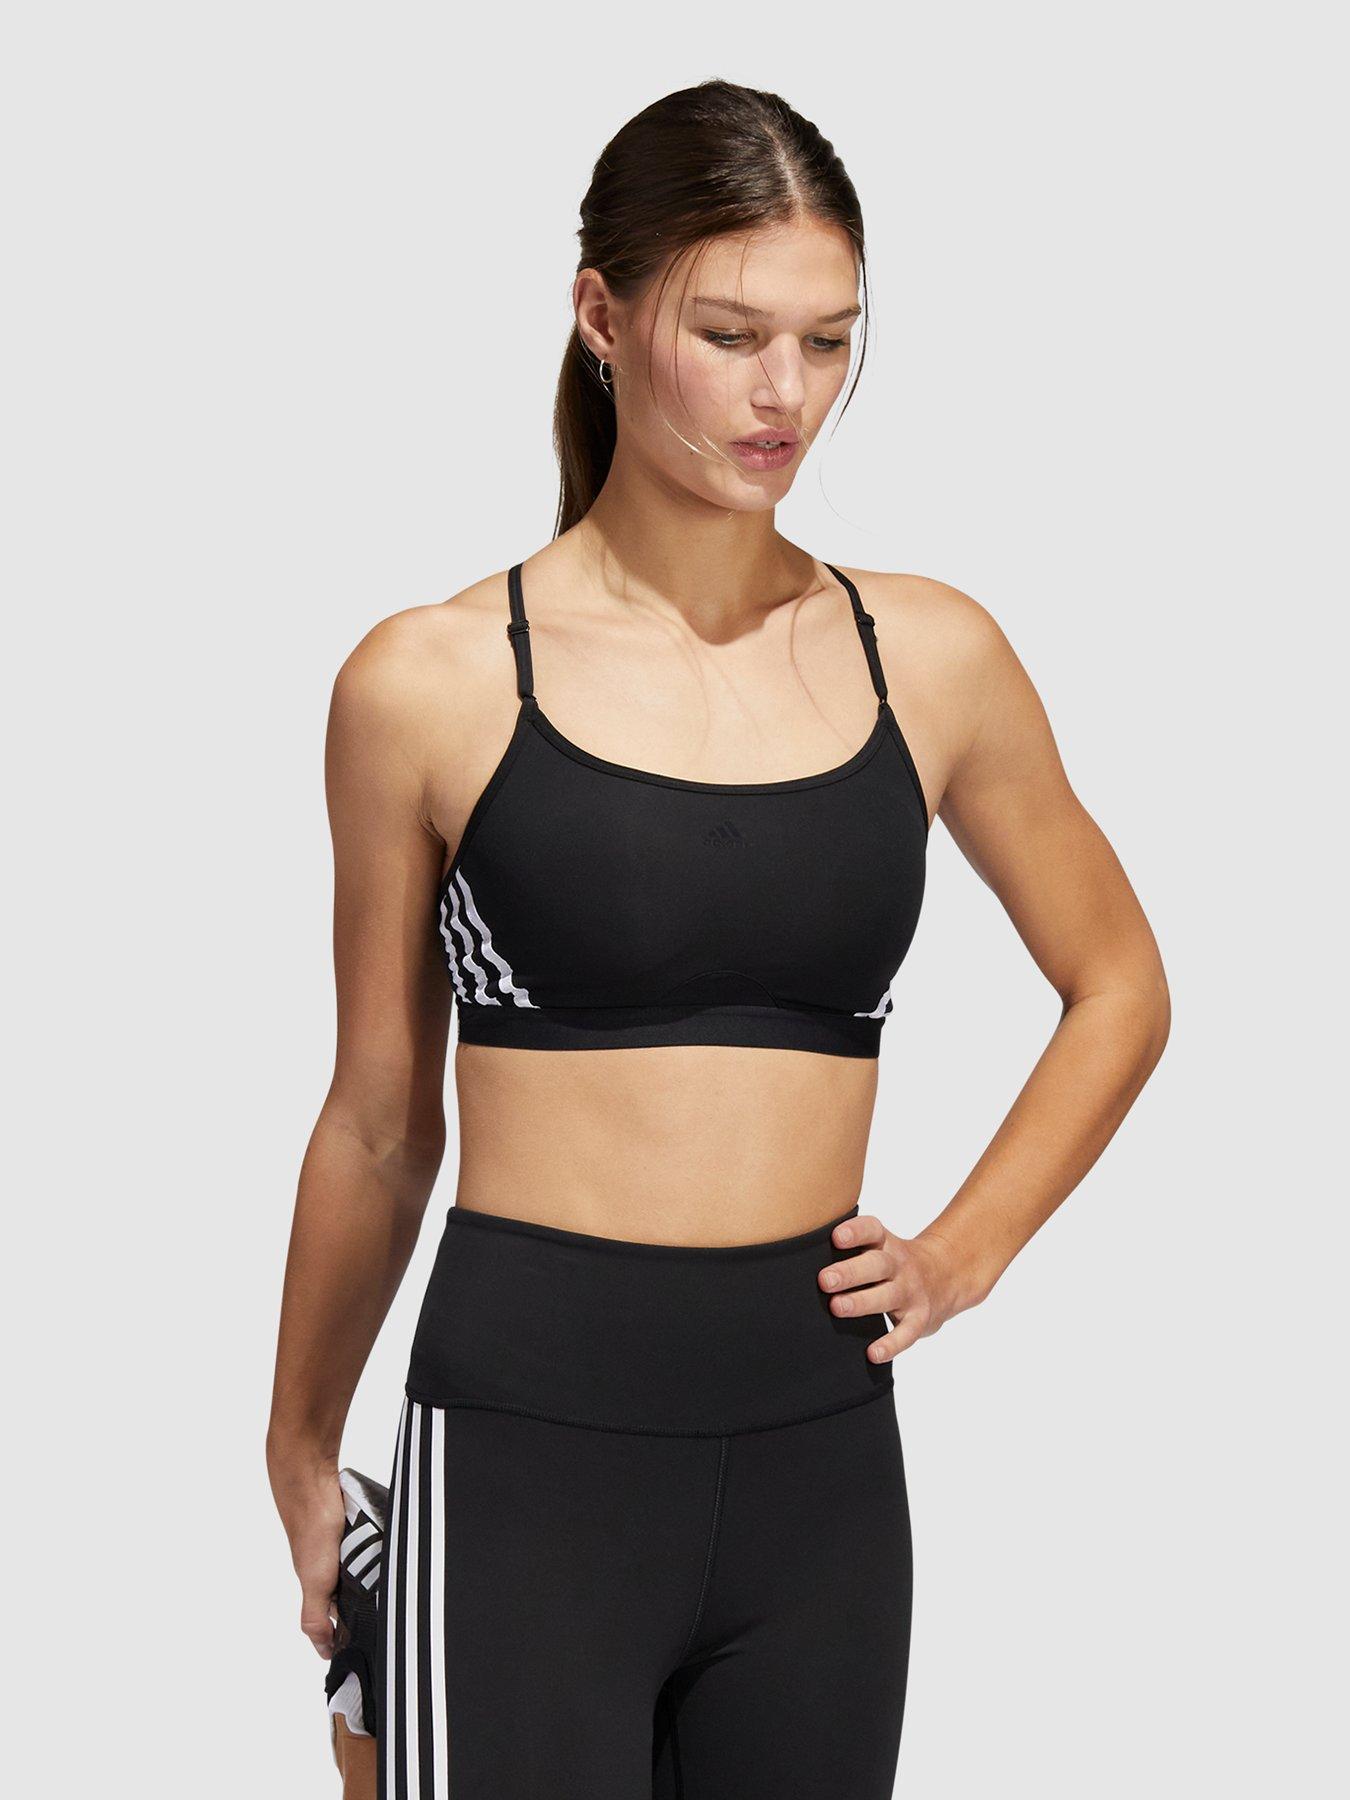 Adidas All Me 3-stripes Sports Bra - Black/white